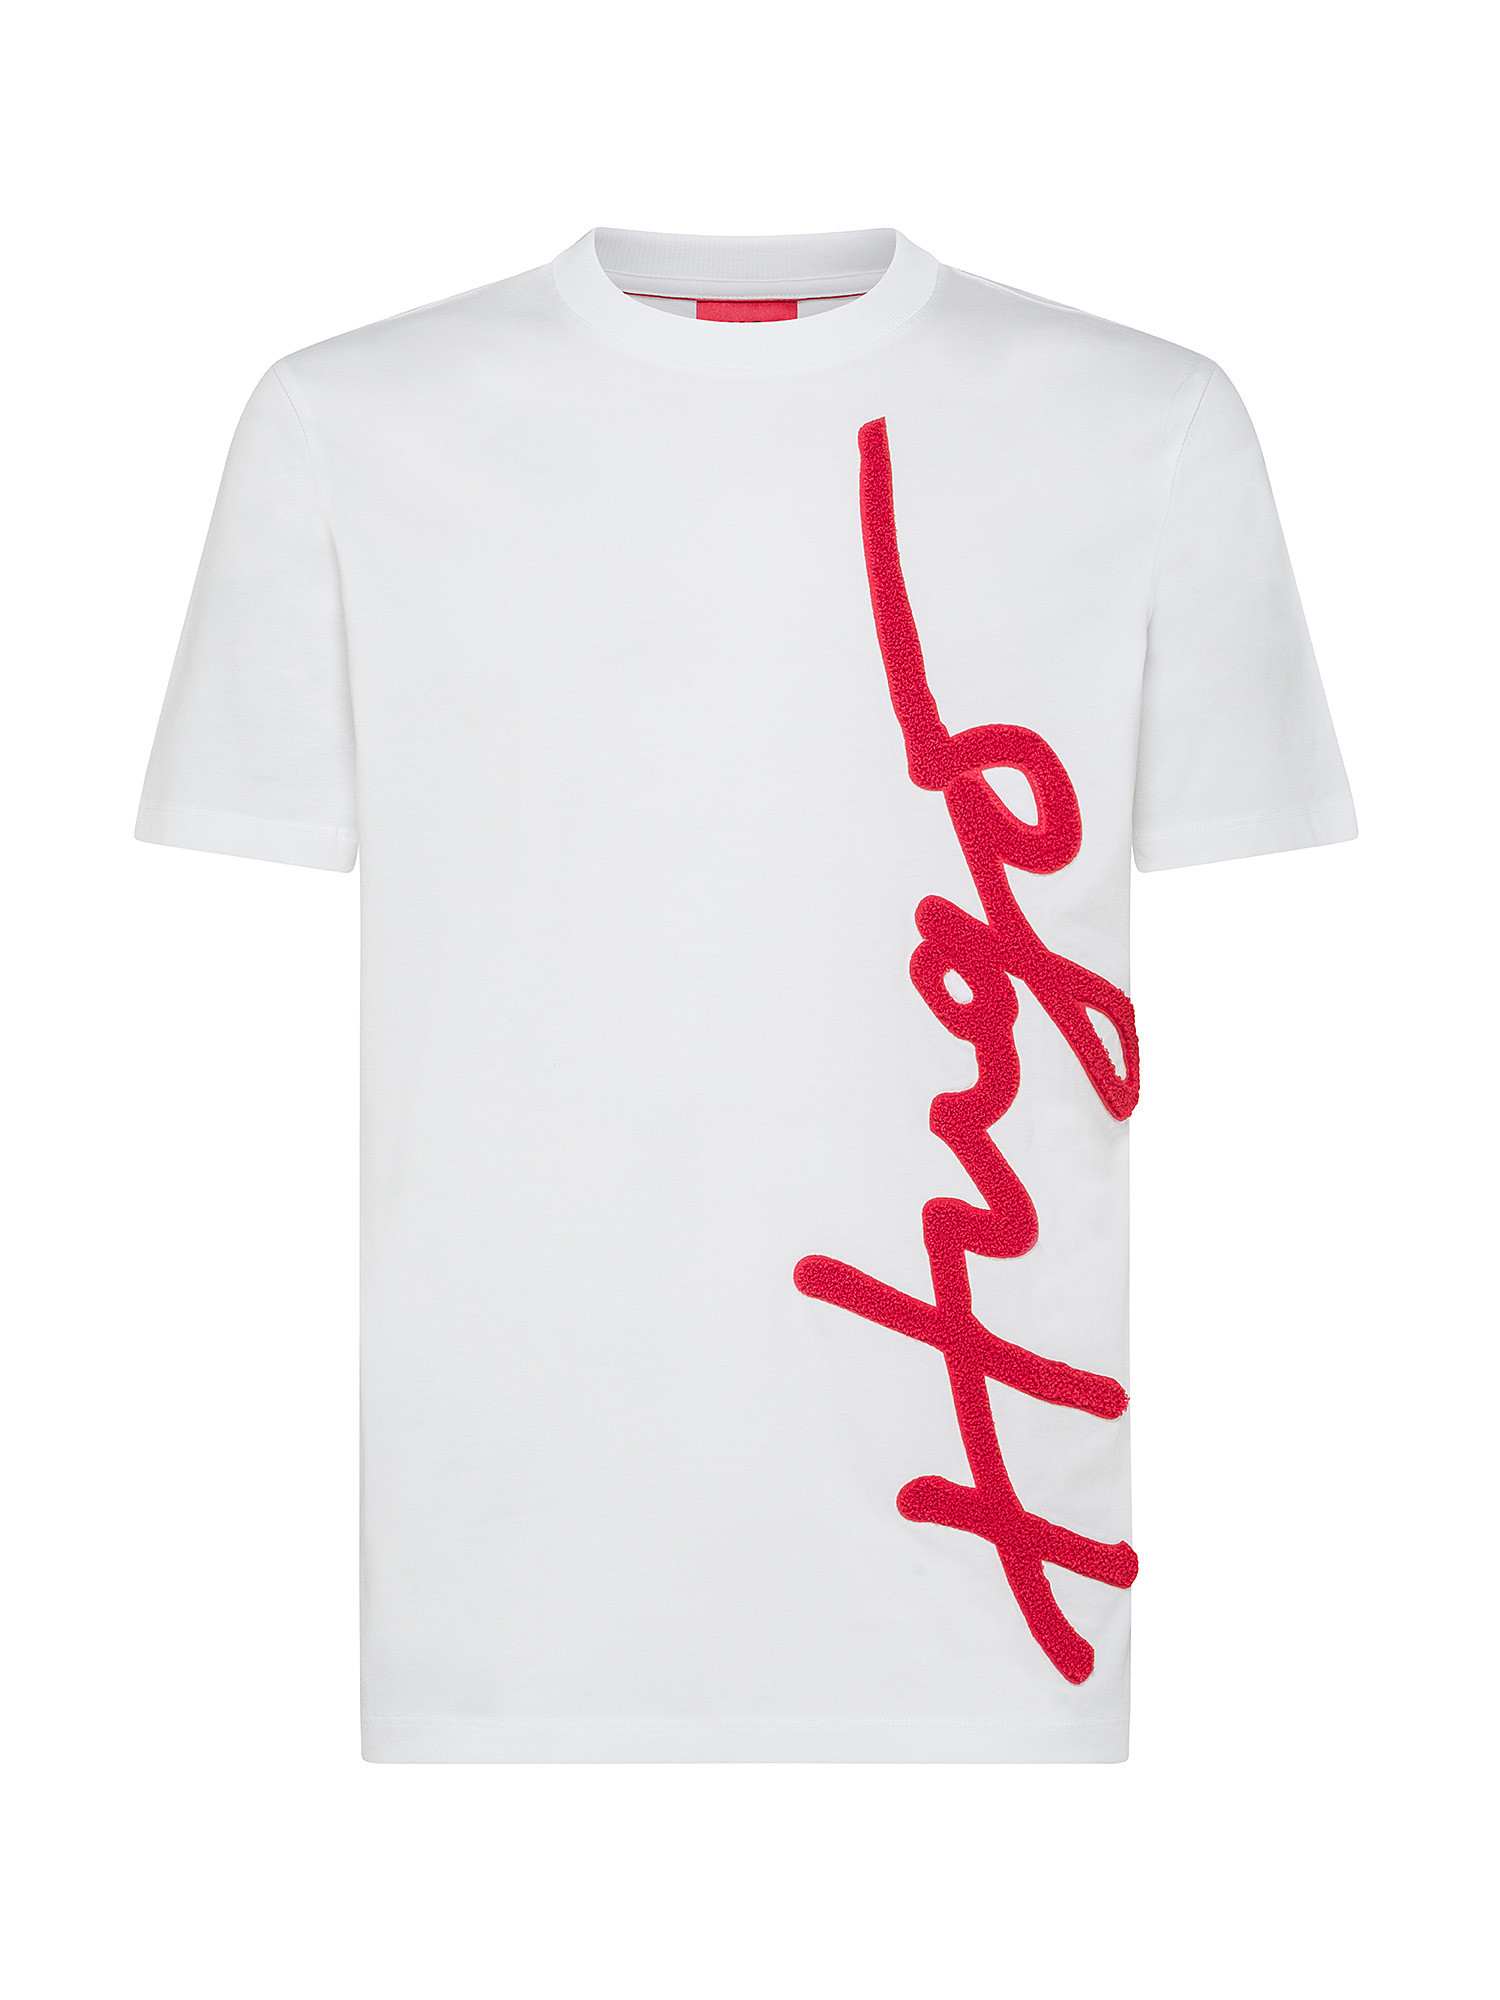 Hugo - T-shirt con logo ricamato in cotone, Bianco, large image number 0